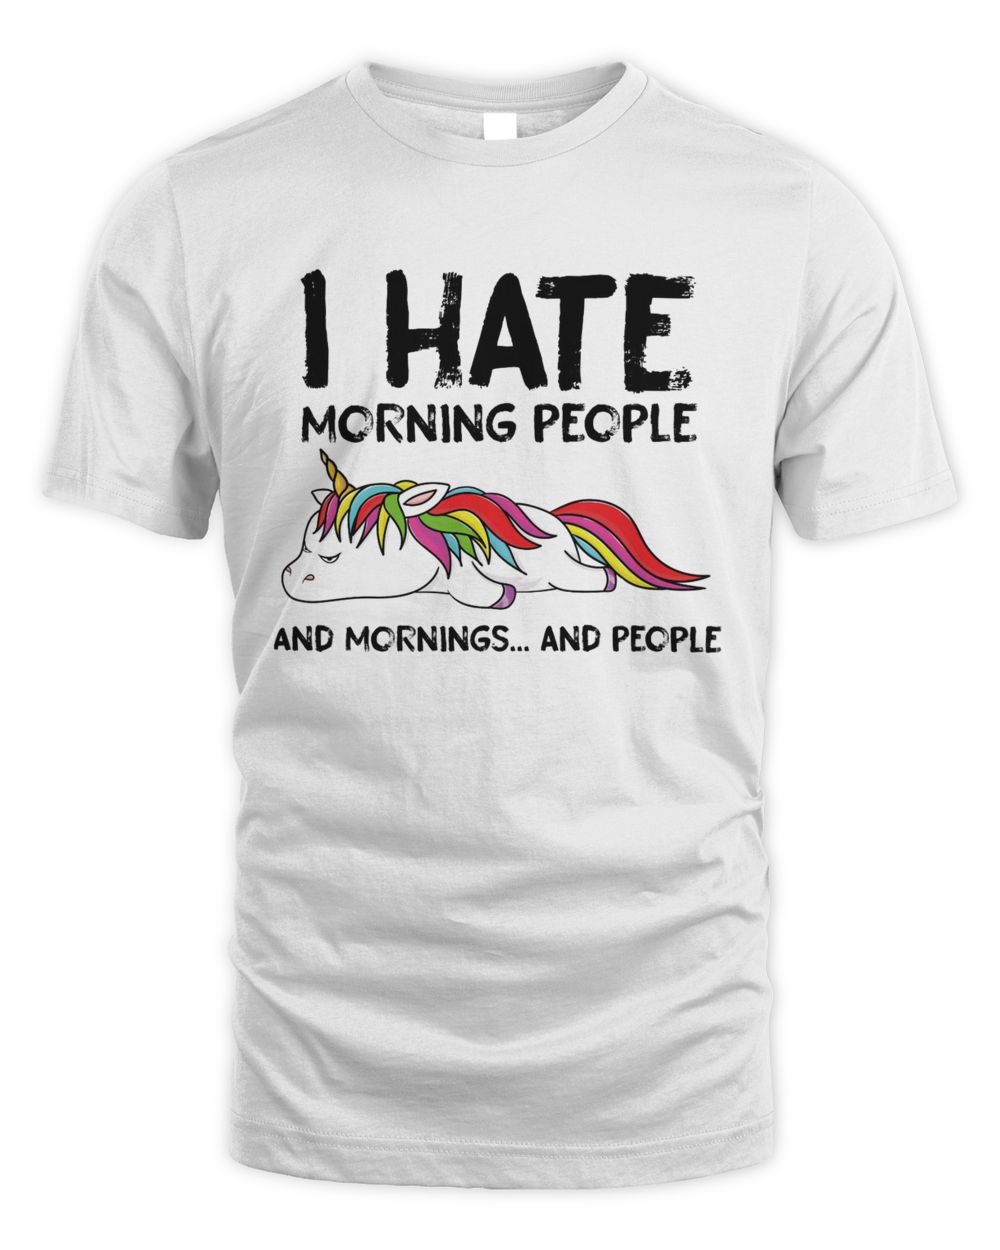 I hate morning people Unisex Standard T-Shirt white 